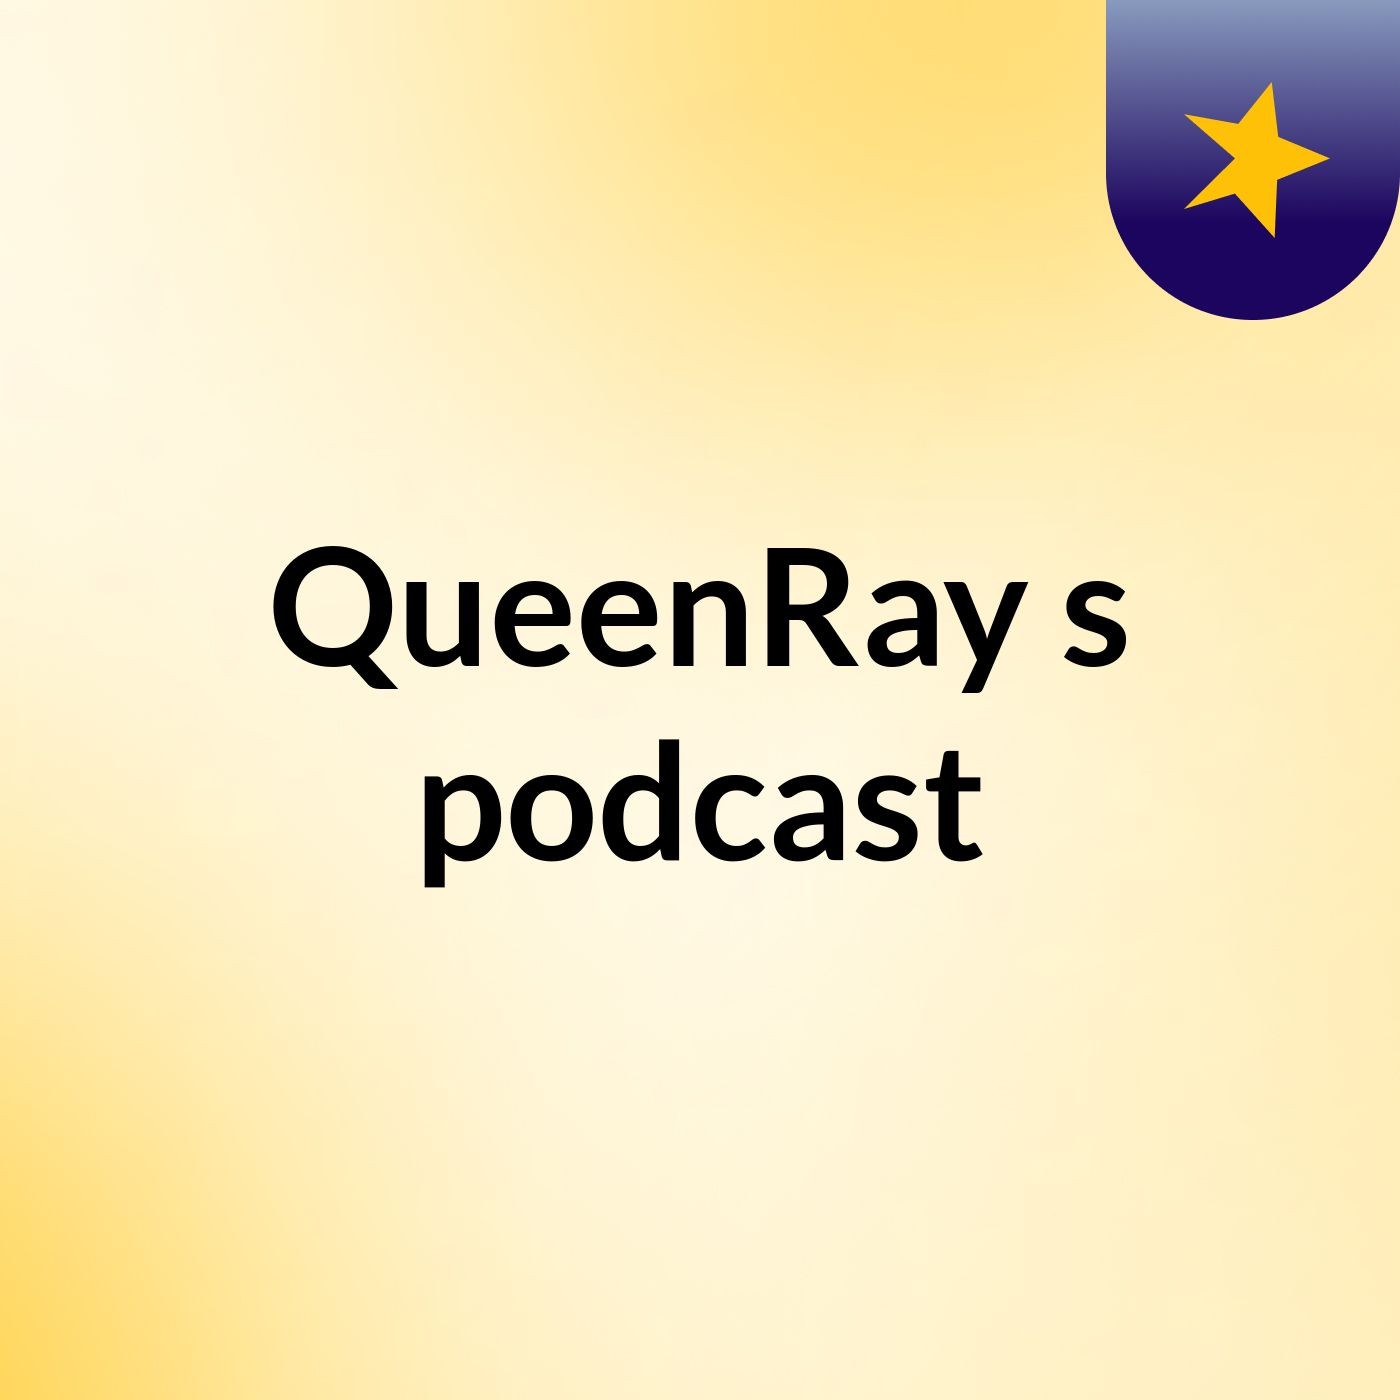 QueenRay's podcast